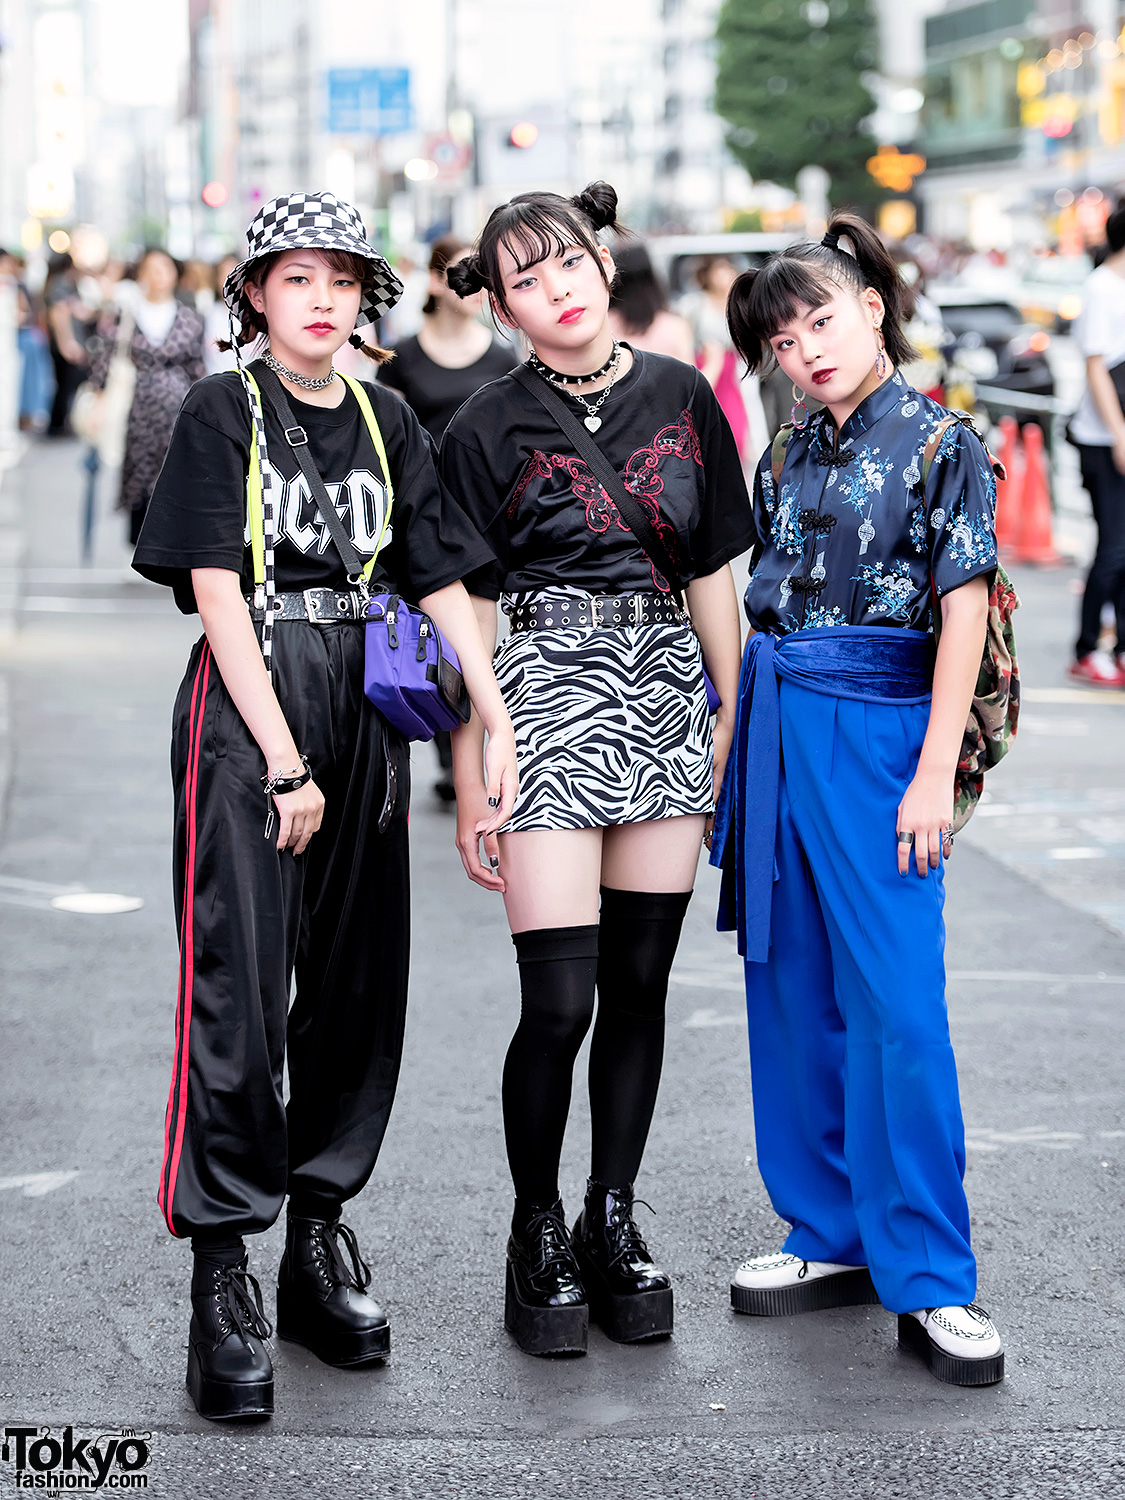 Harajuku Girls w/ Faith Tokyo Crossbody Bags, Funktique Top, Zebra Miniskirt & Platform Boots